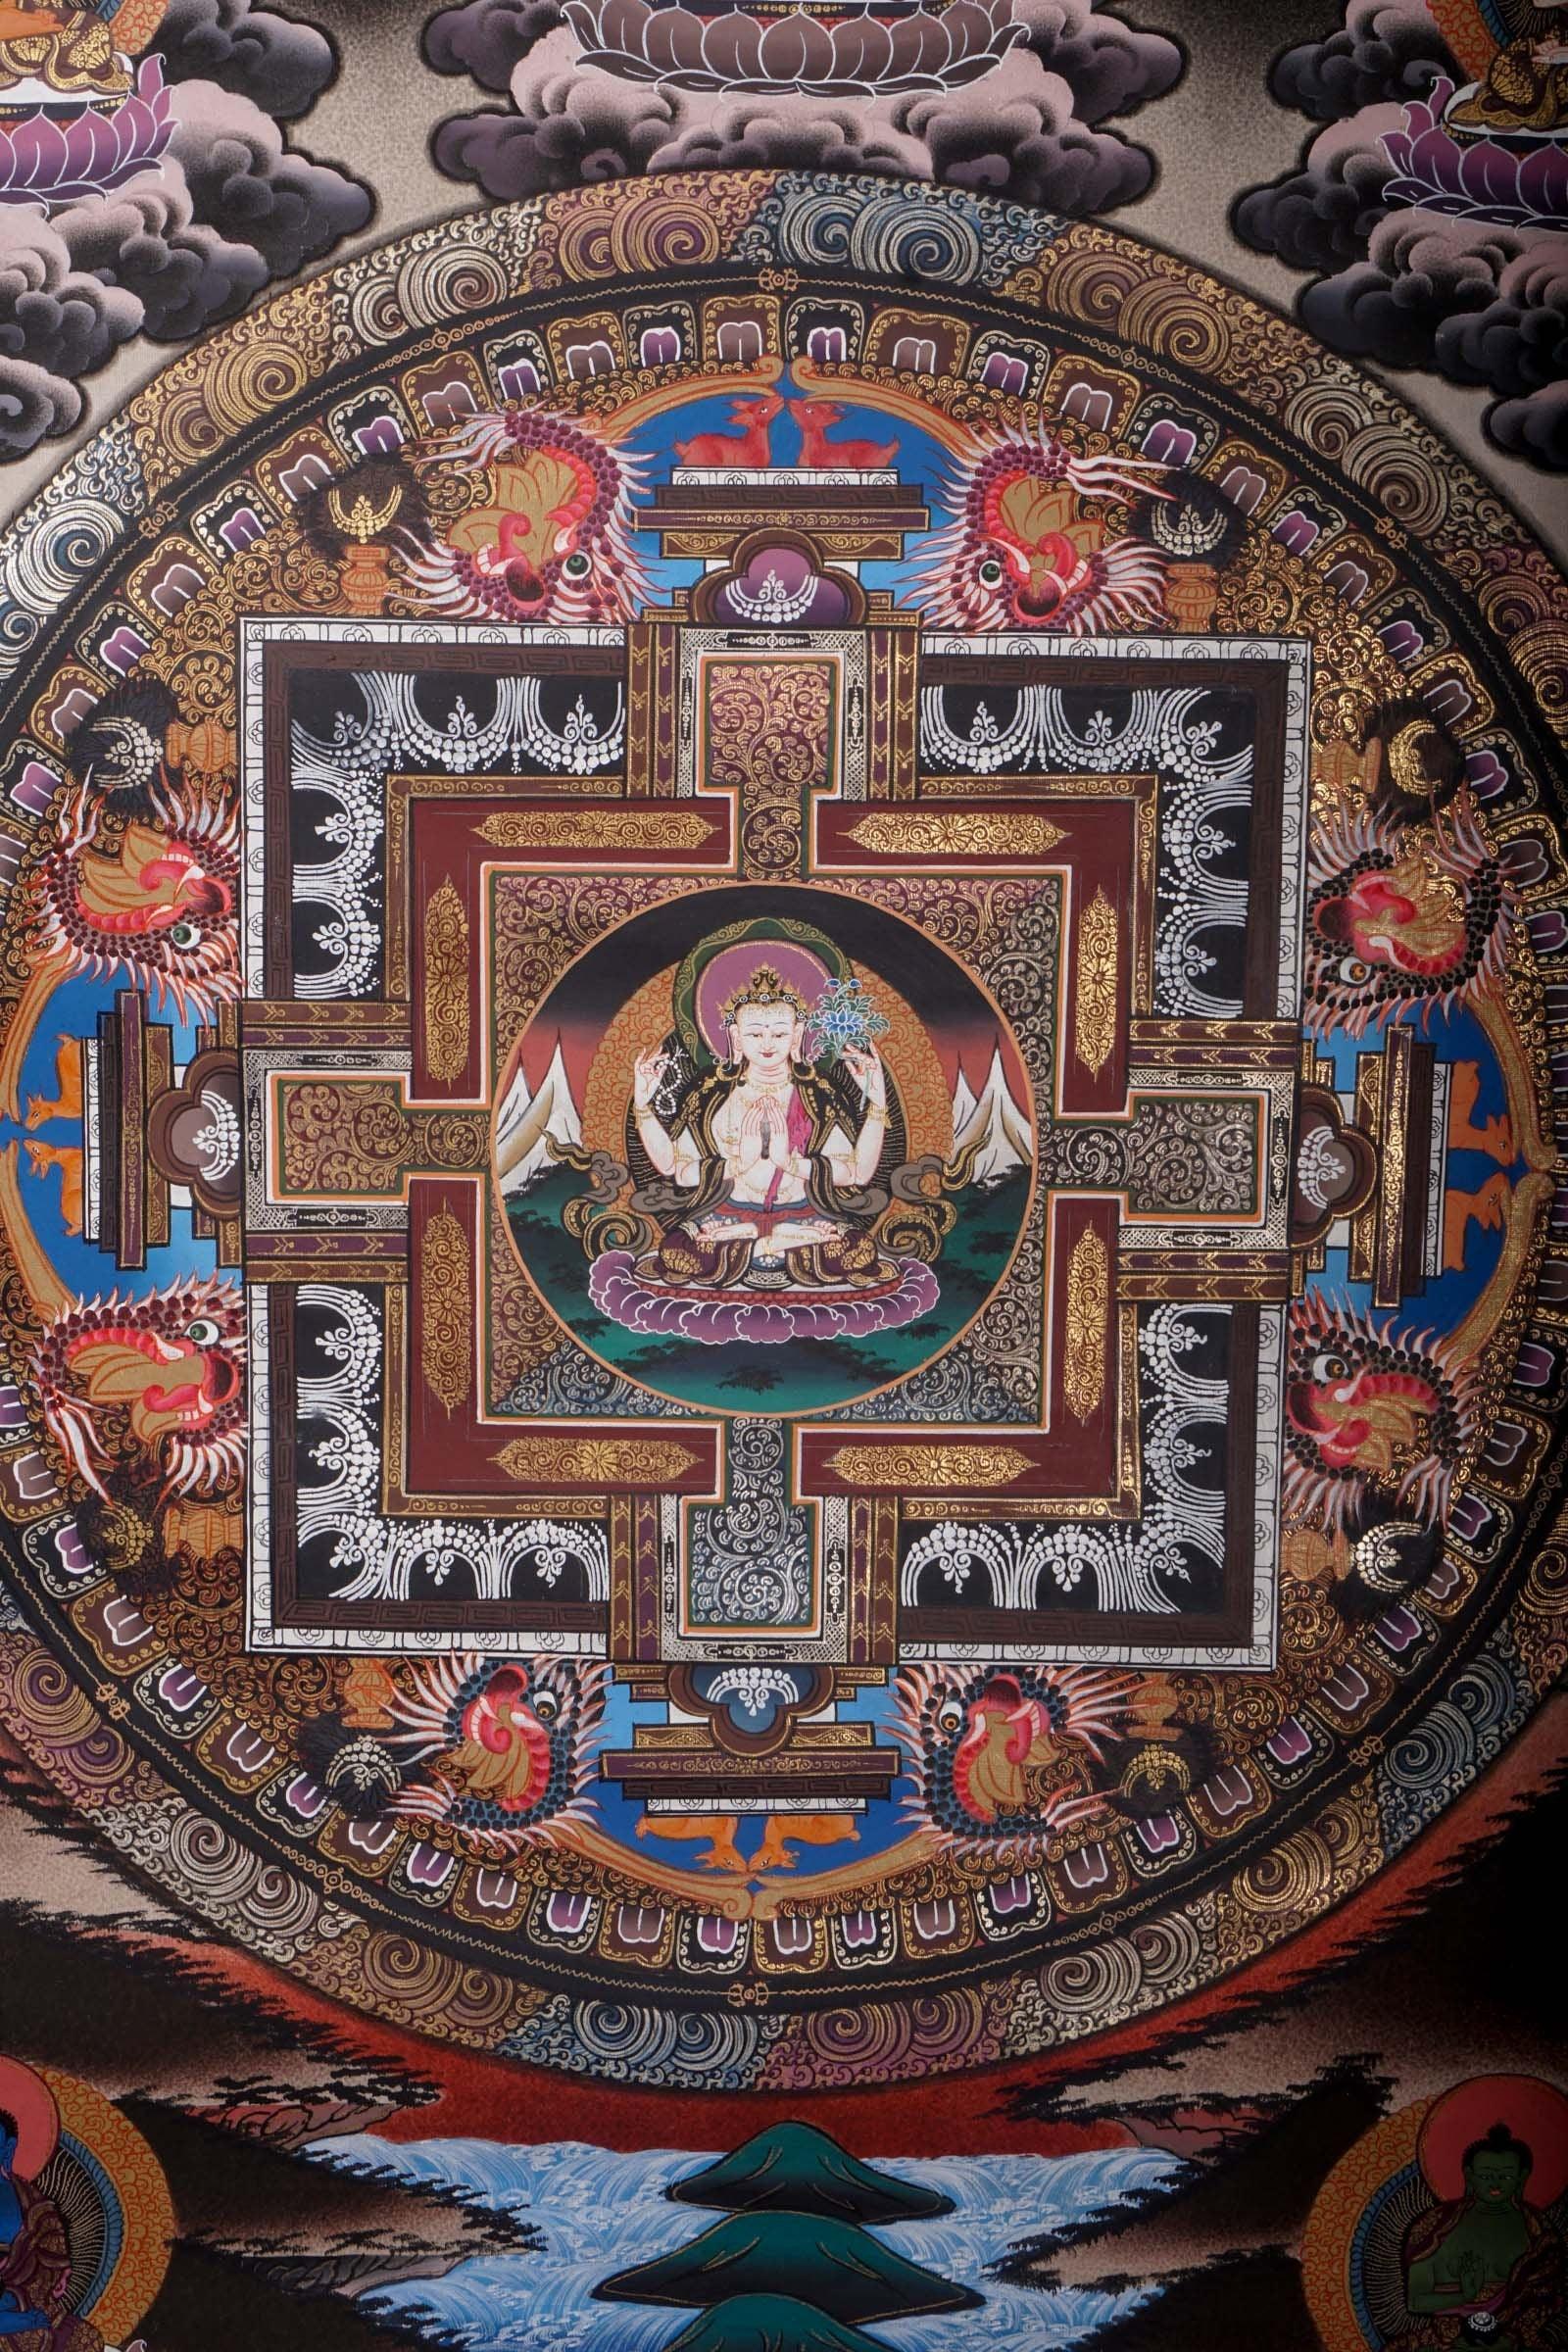 Chengresi Boddhisattva Mandala for room decoration and chakra healing